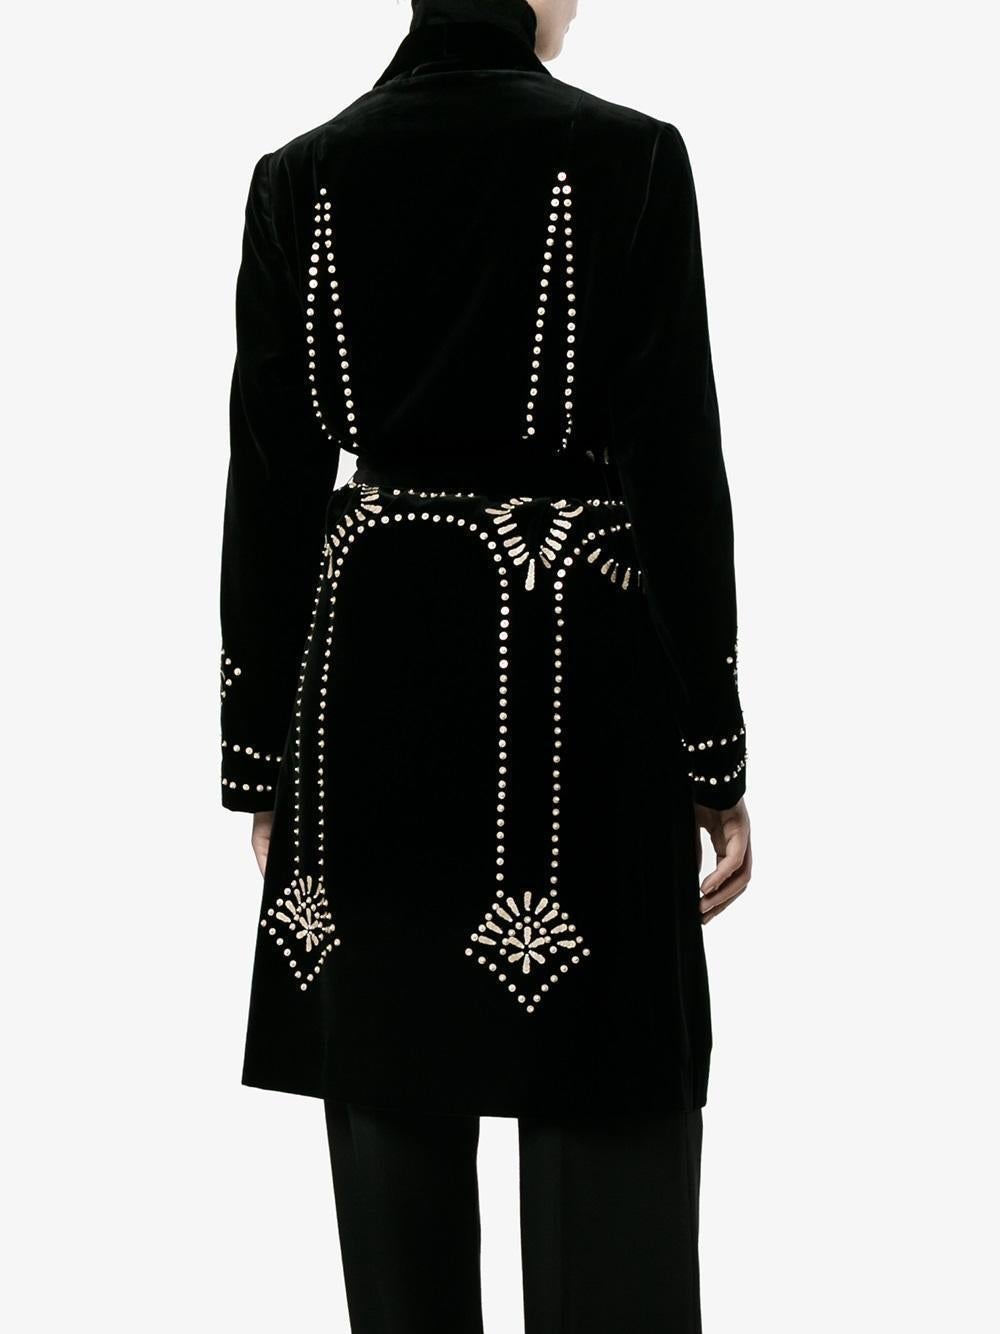 Women's New DRIES VAN NOTEN 'Ravik' Black Sequin Embellished Velvet Coat FR38 US6 For Sale